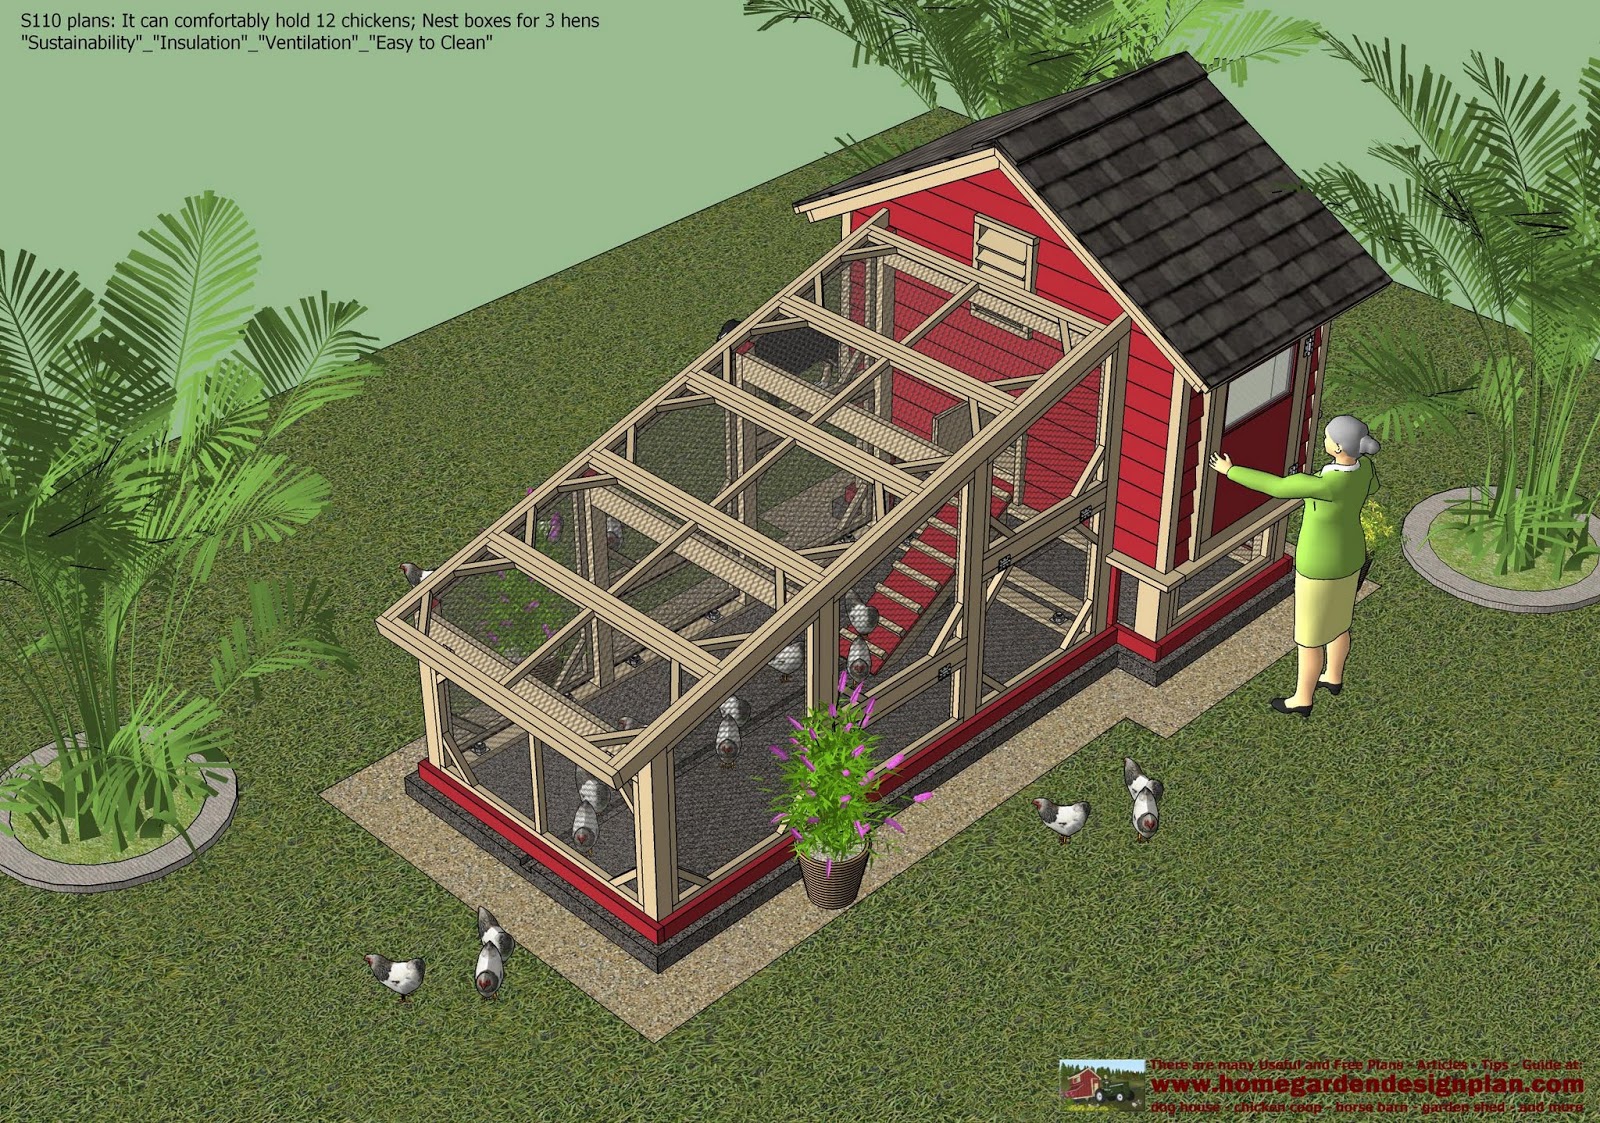  chicken coop plans chicken coop design how to build a chicken coop